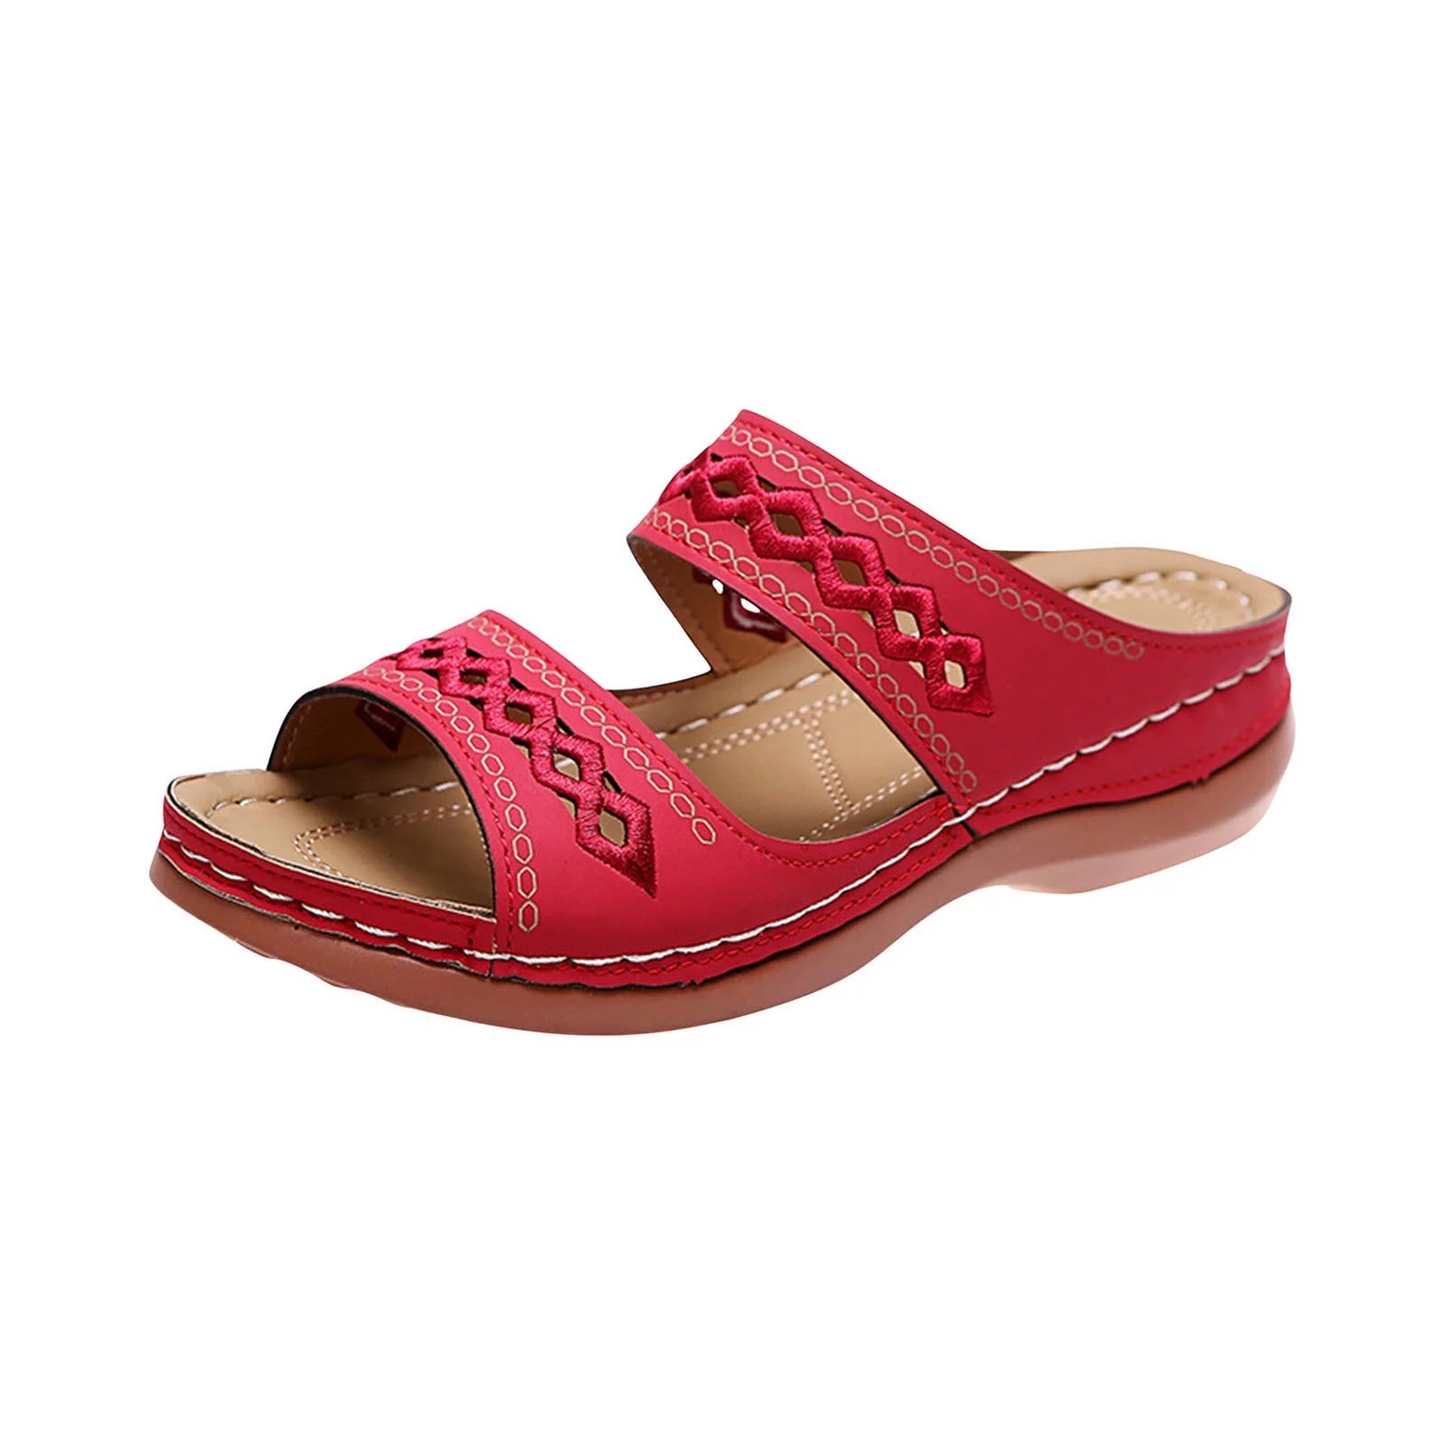 Valeria - Casual Outdoor Wedge Sandals